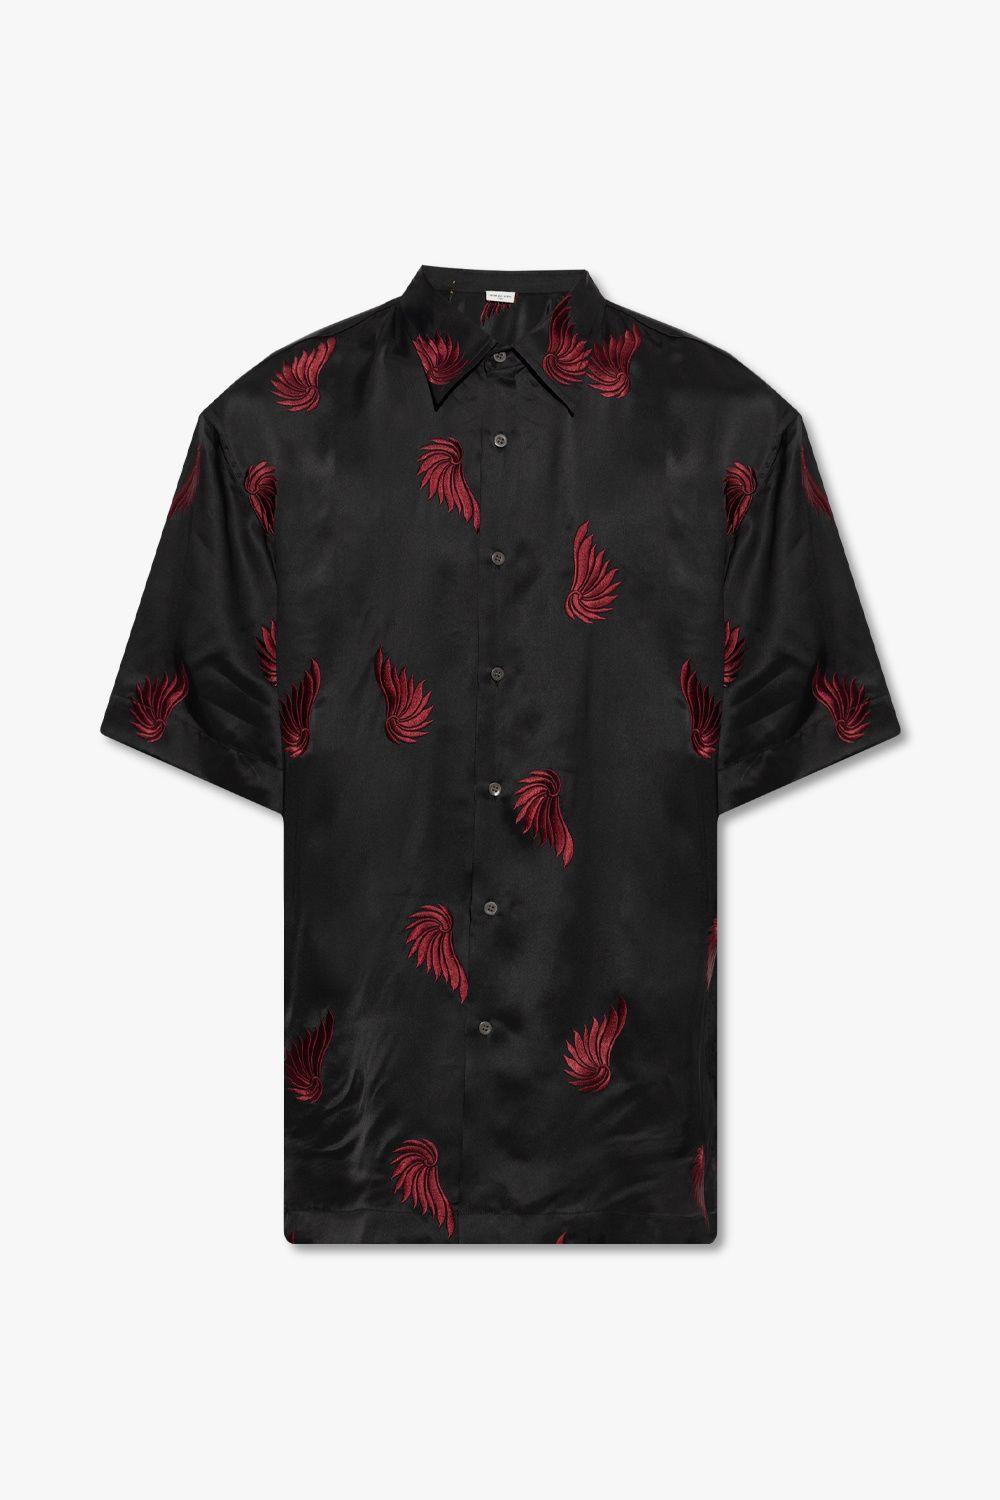 Dries Van Noten Shirt With Short Sleeves in Black | Lyst